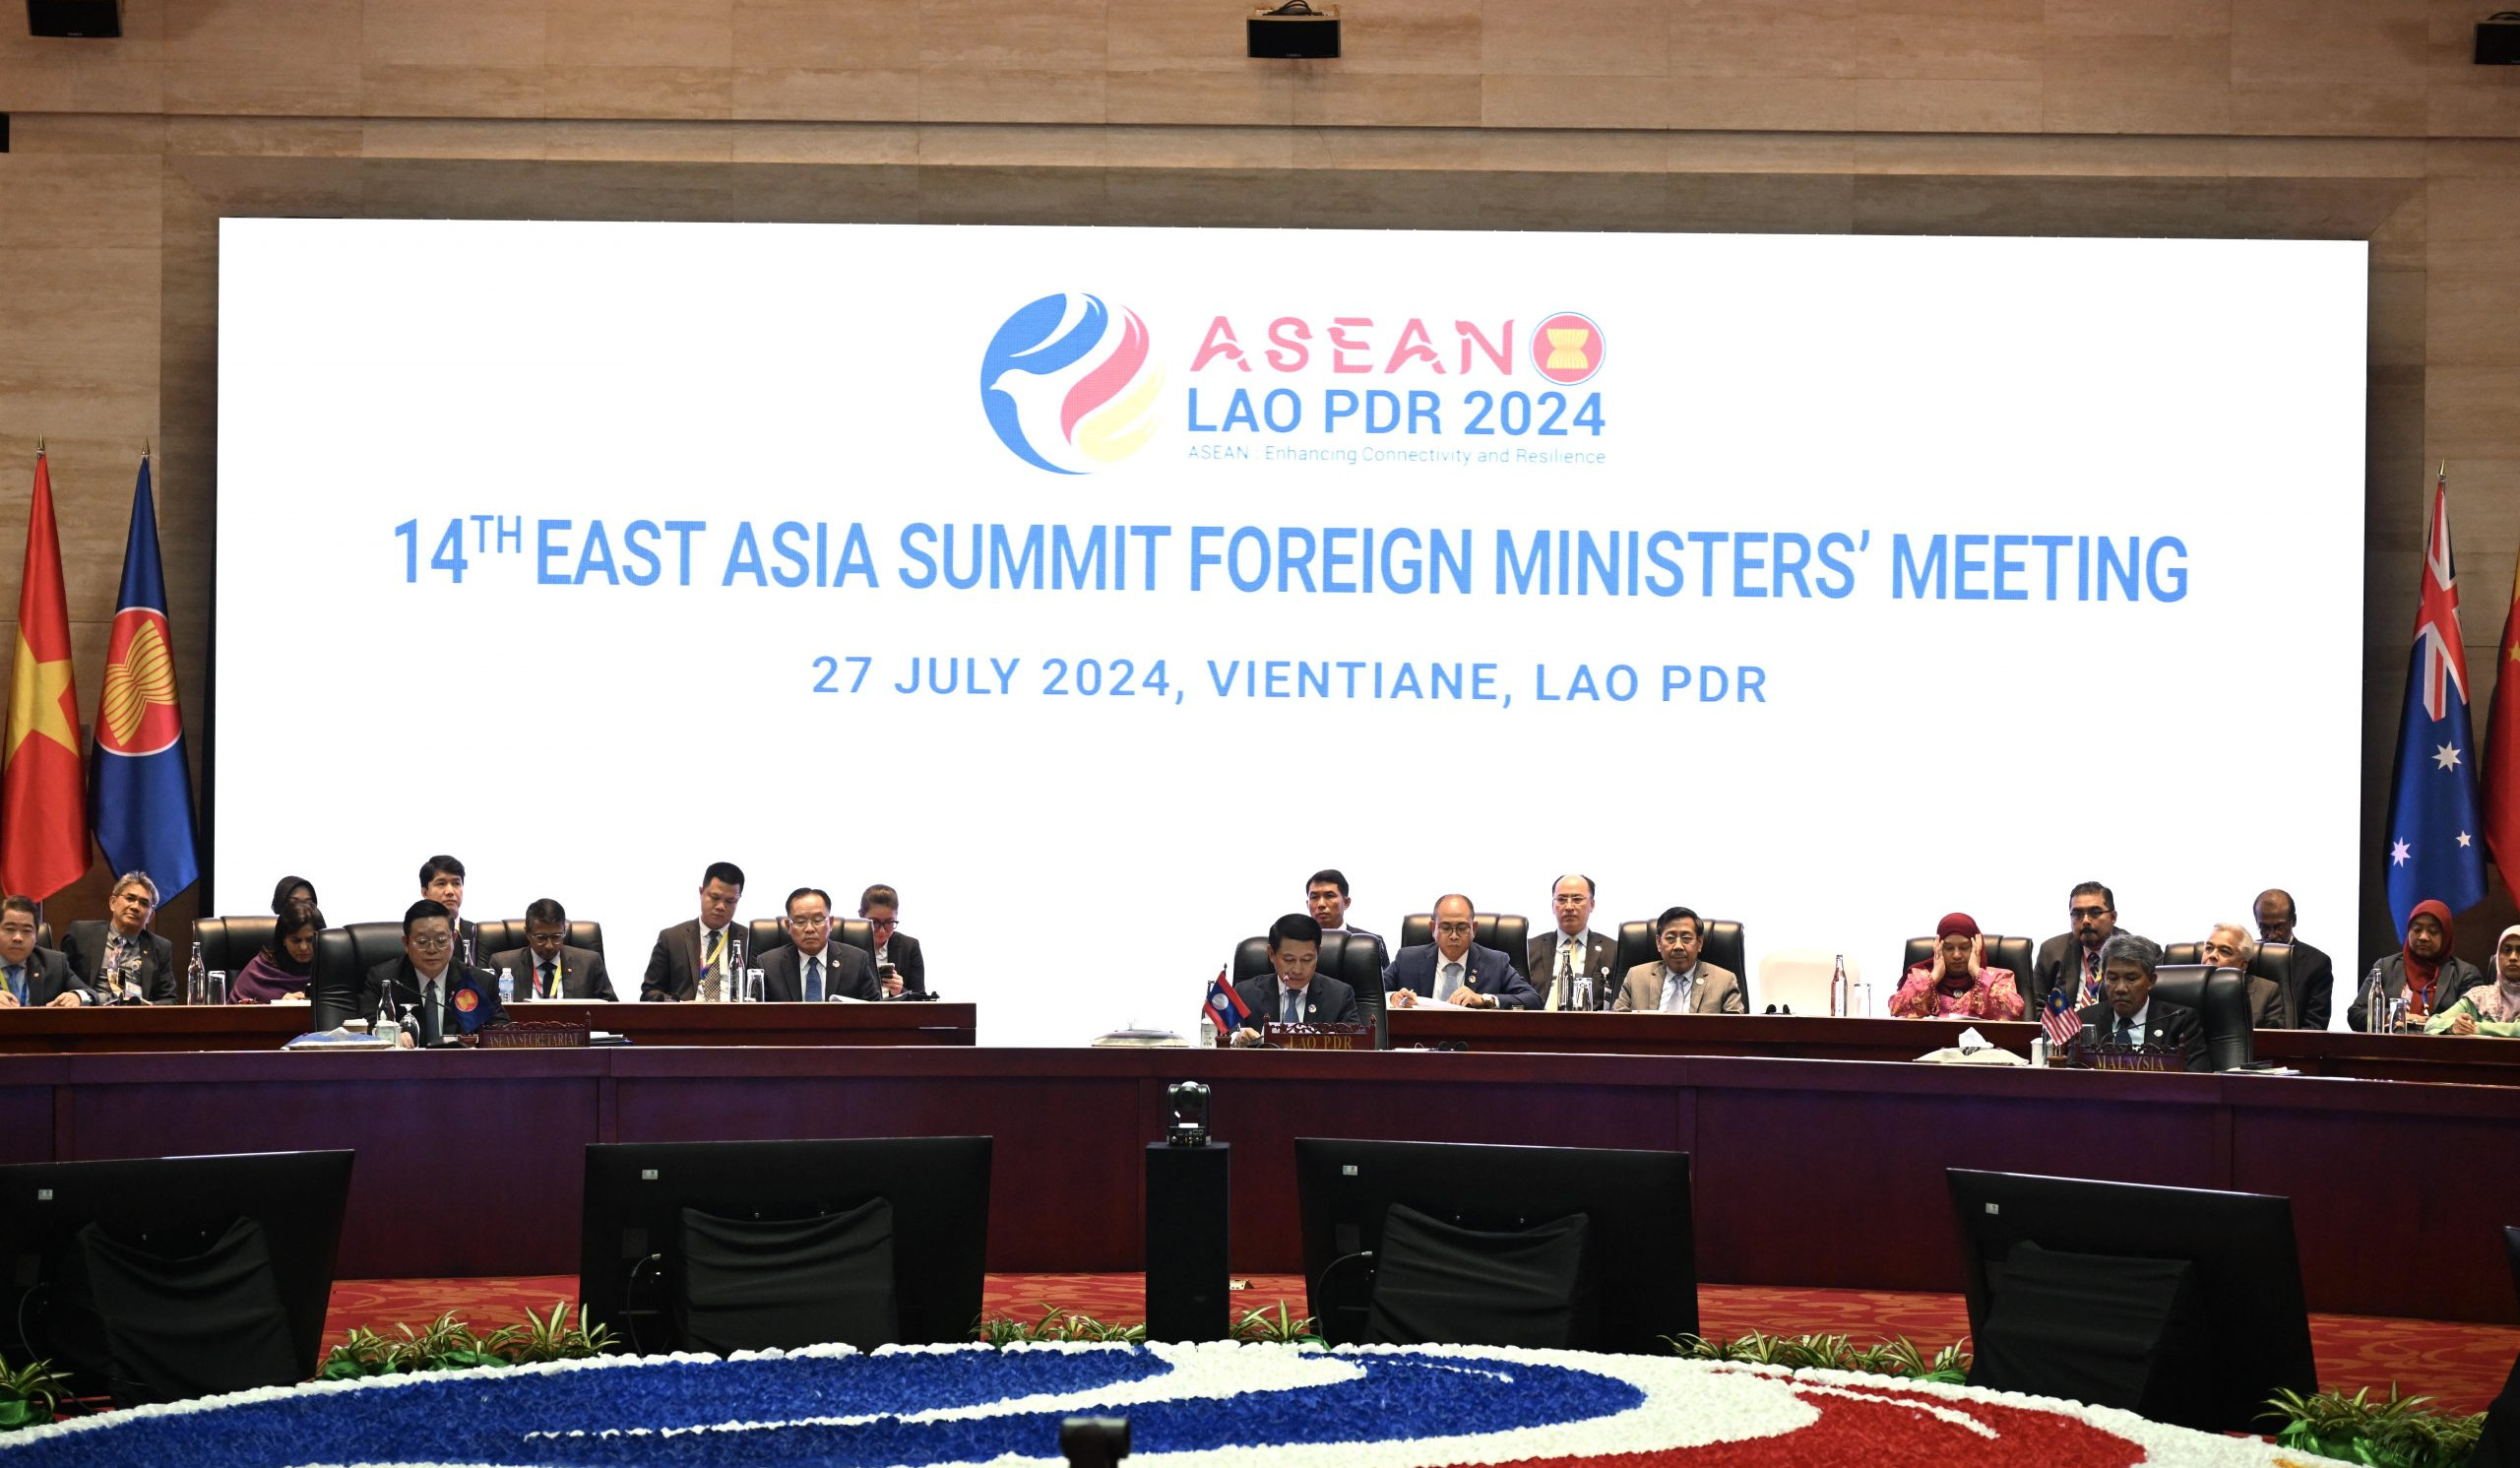 Laos kicks off East Asia Summit and ASEAN Regional Forum